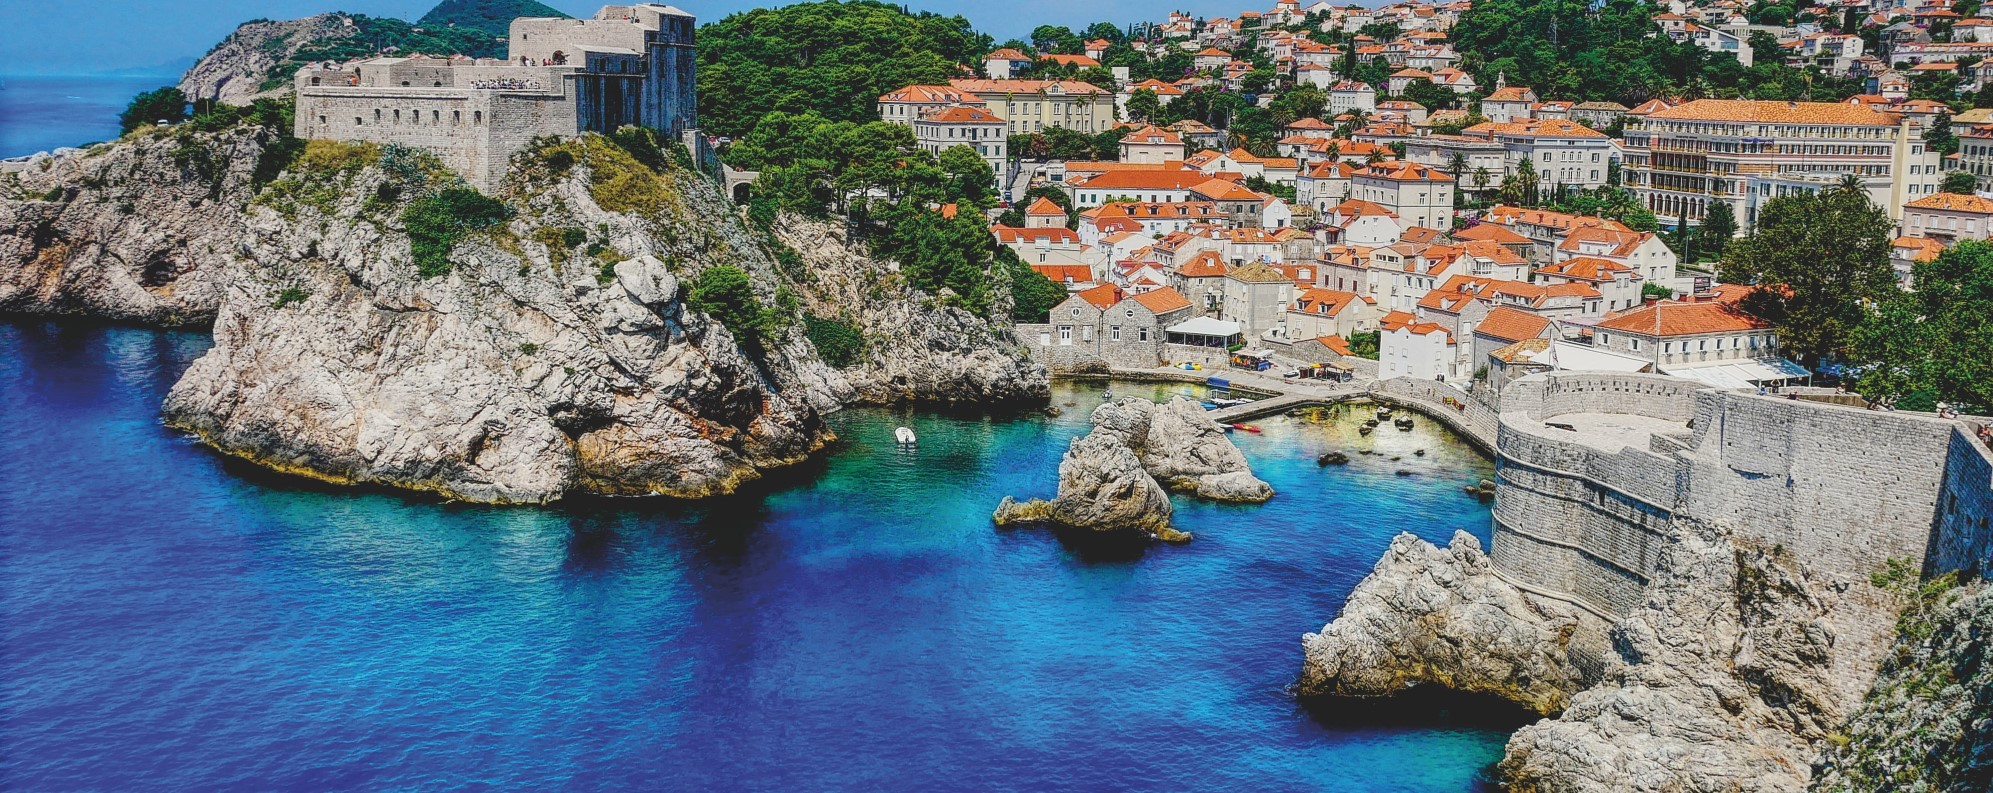 Dubrovnik west harbor in Croatia; Places to visit iin August